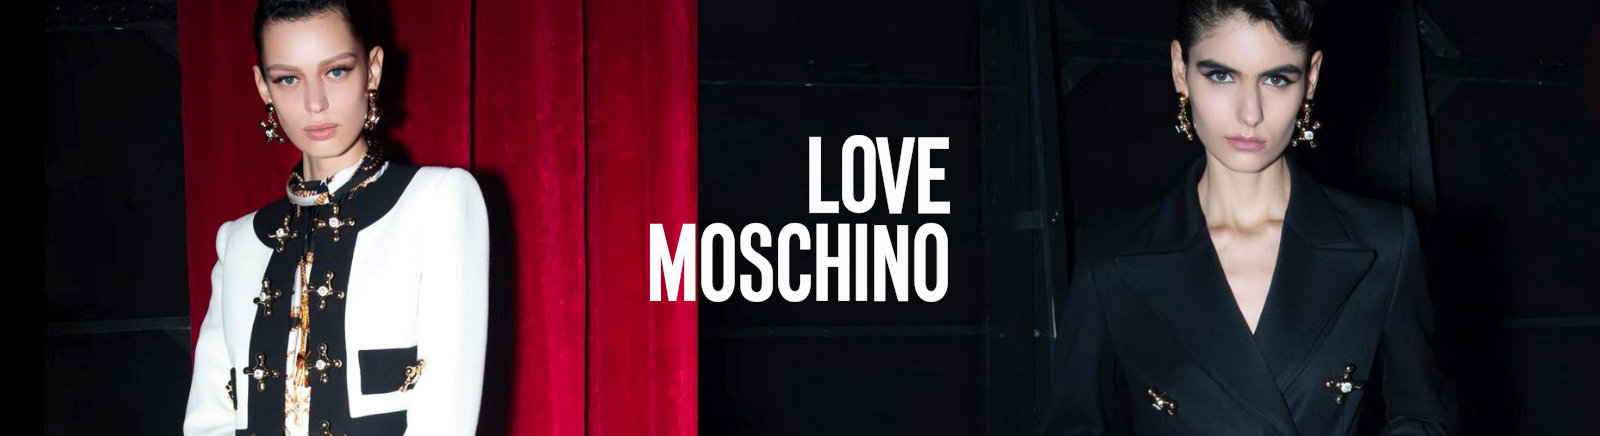 Love Moschino Kinderschuhe online kaufen bei Juppen